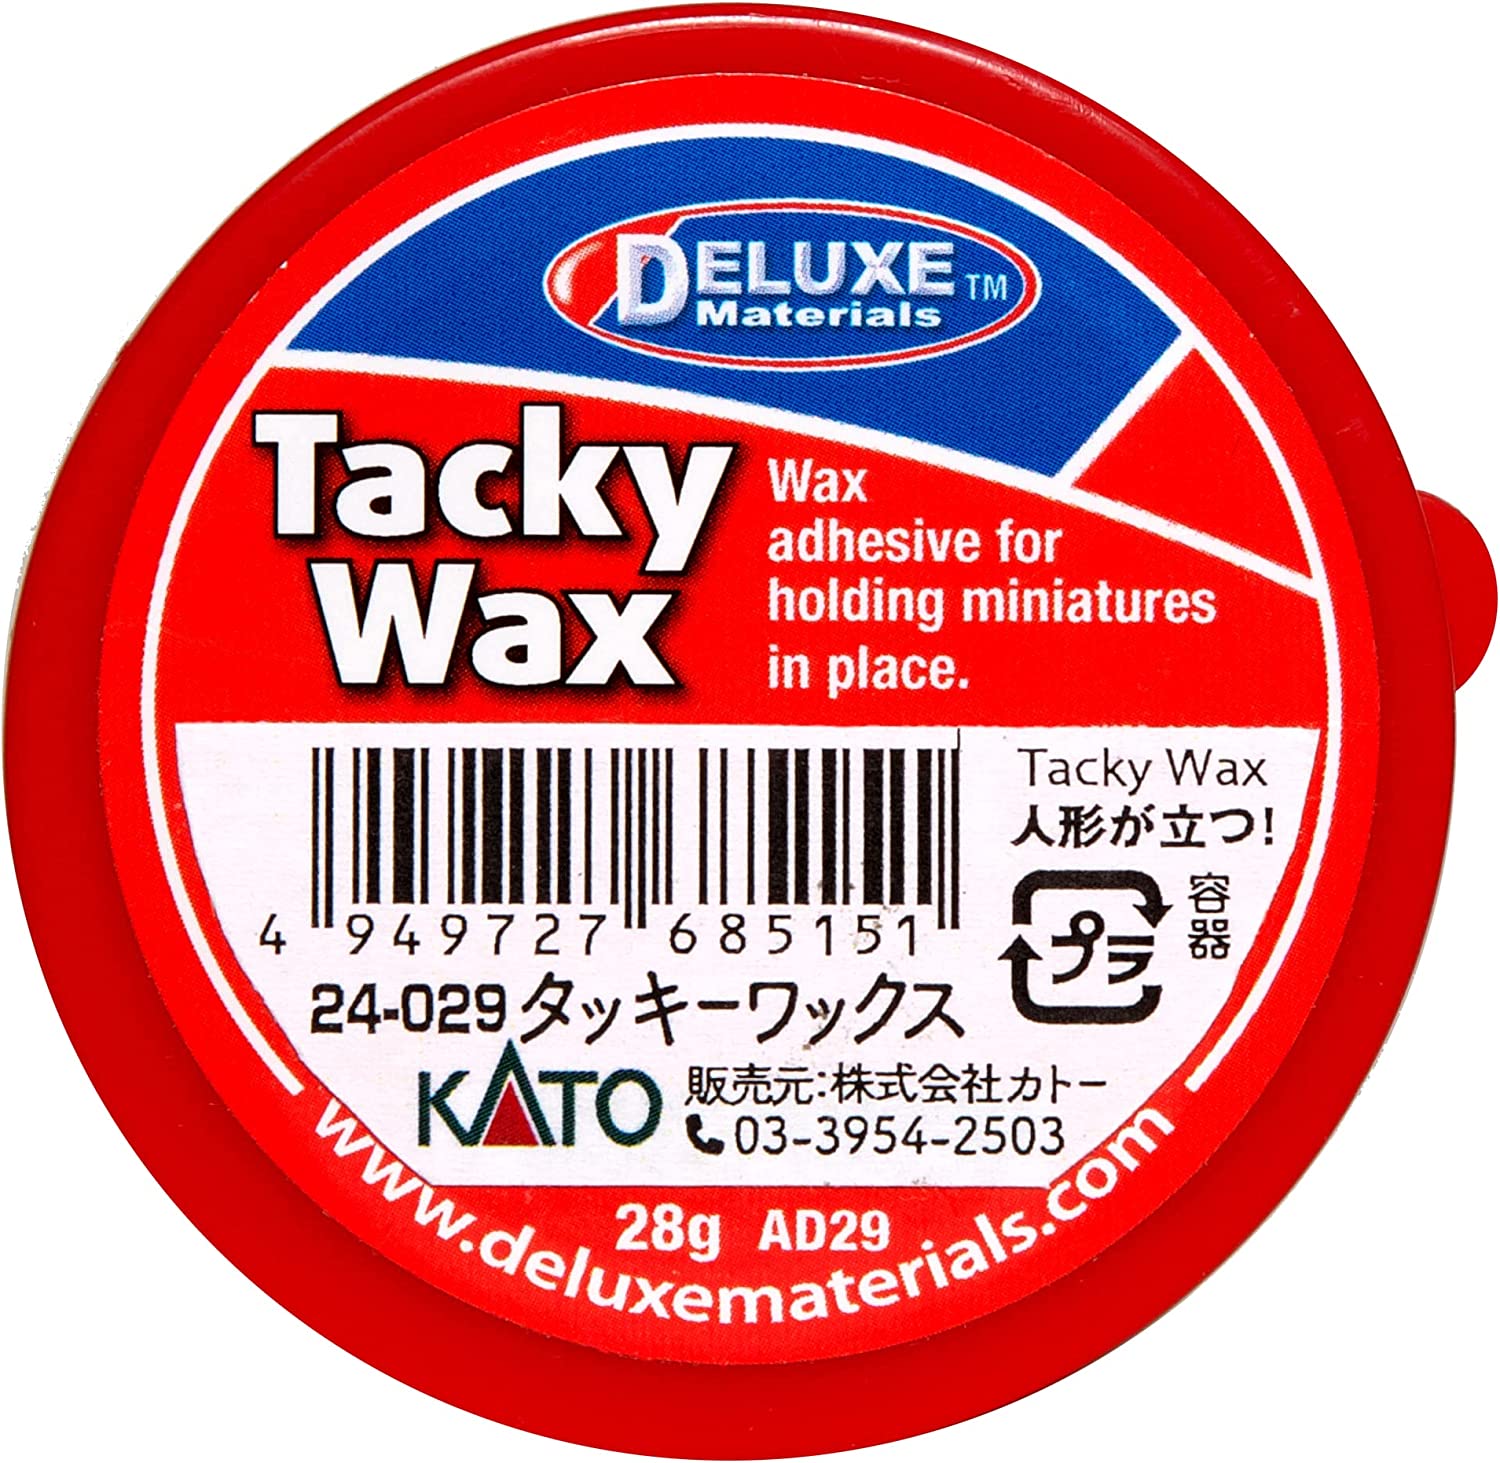 Tacky wax 28g - Deluxe materials AD-29